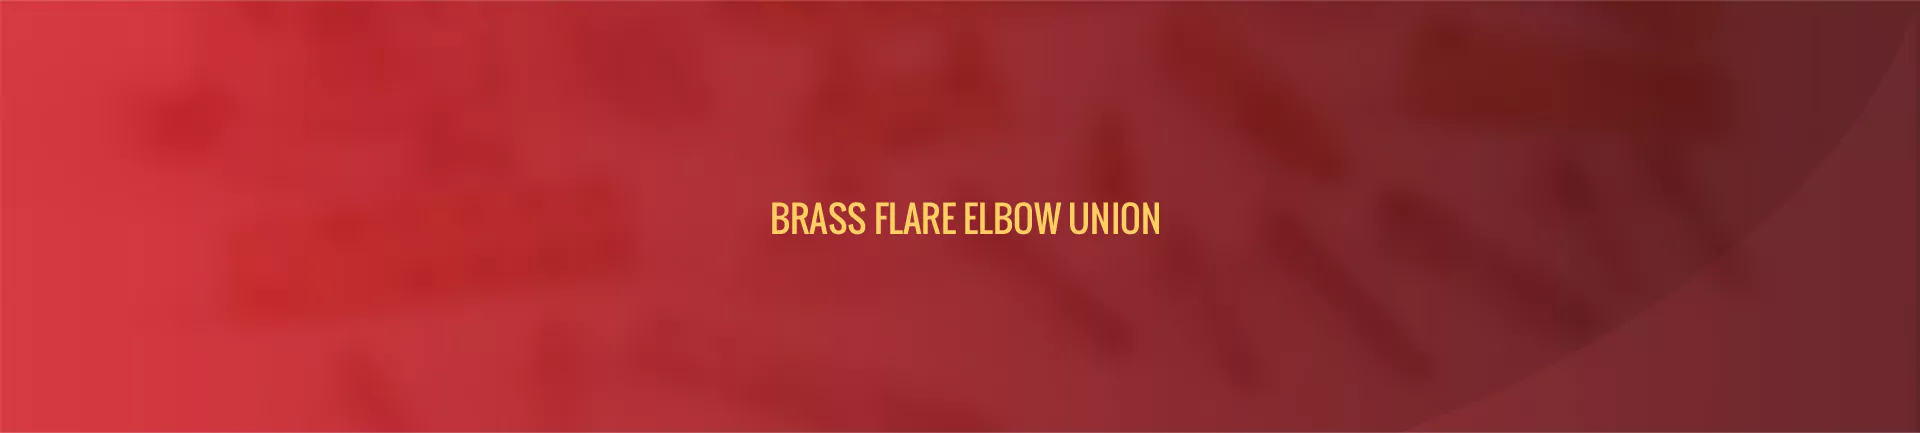 brass_flare_elbow_union-banner